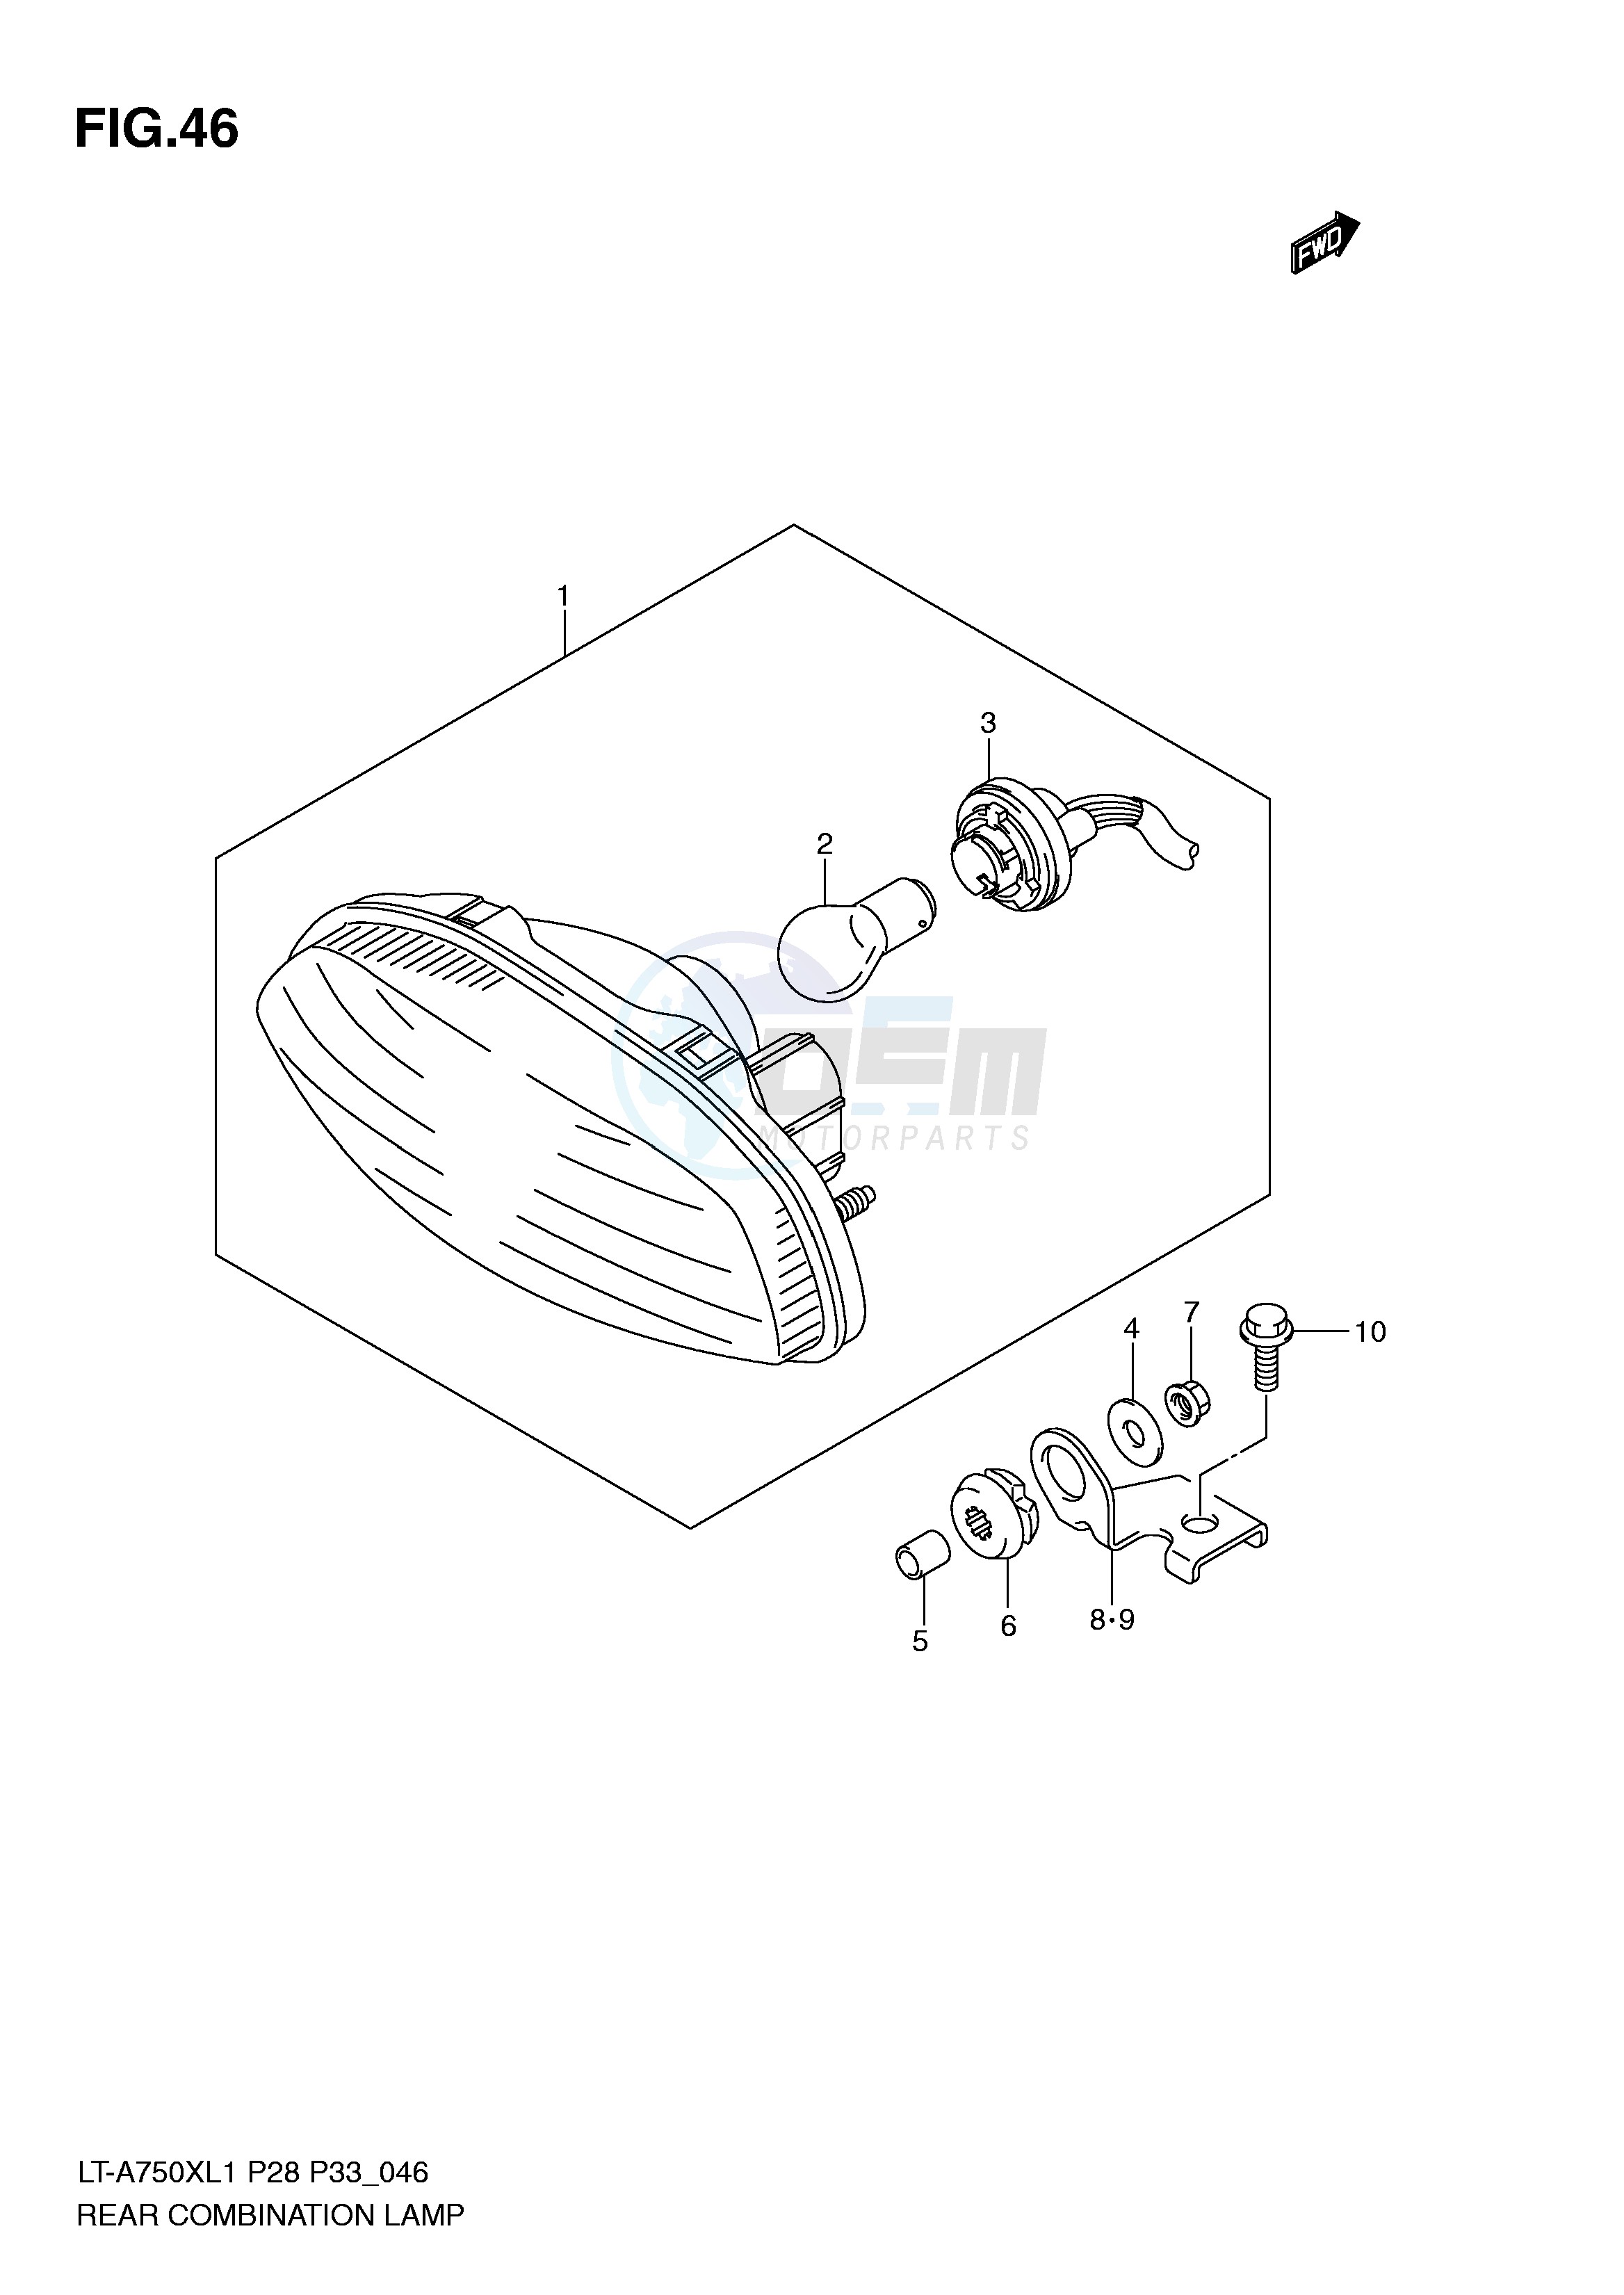 REAR COMBINATION LAMP (LT-A750XZL1 P33) blueprint